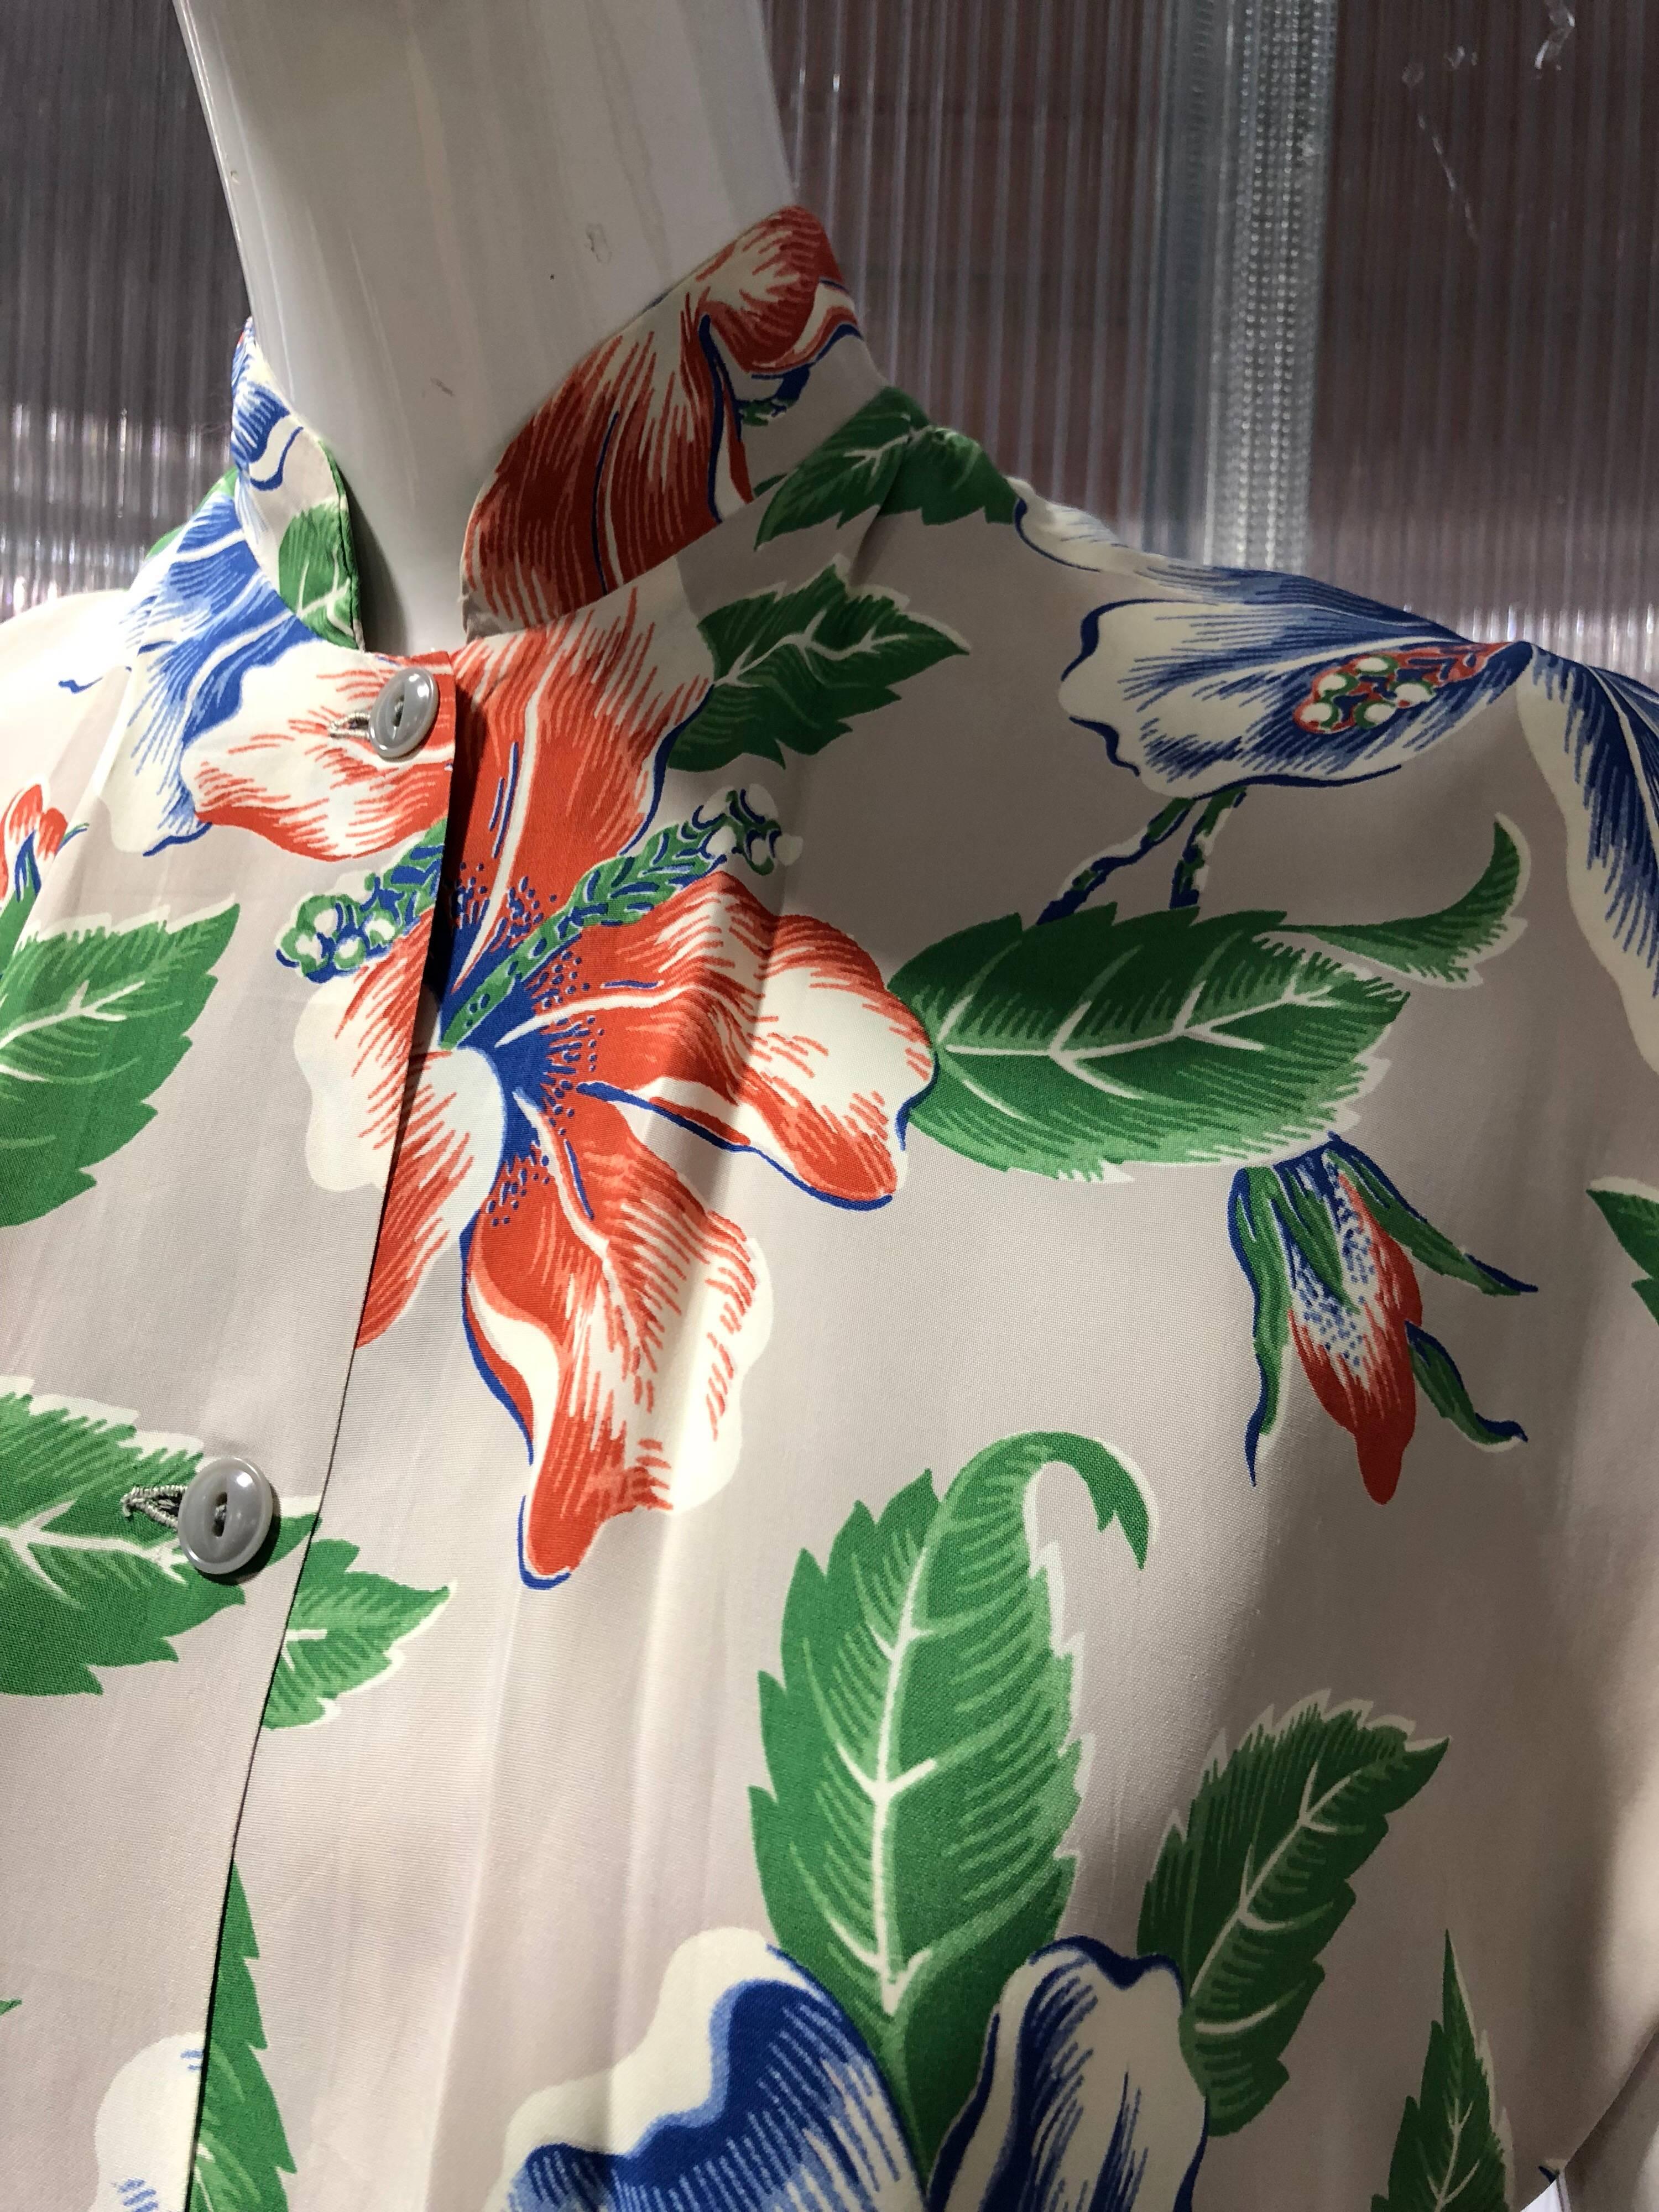 tropical print blouse